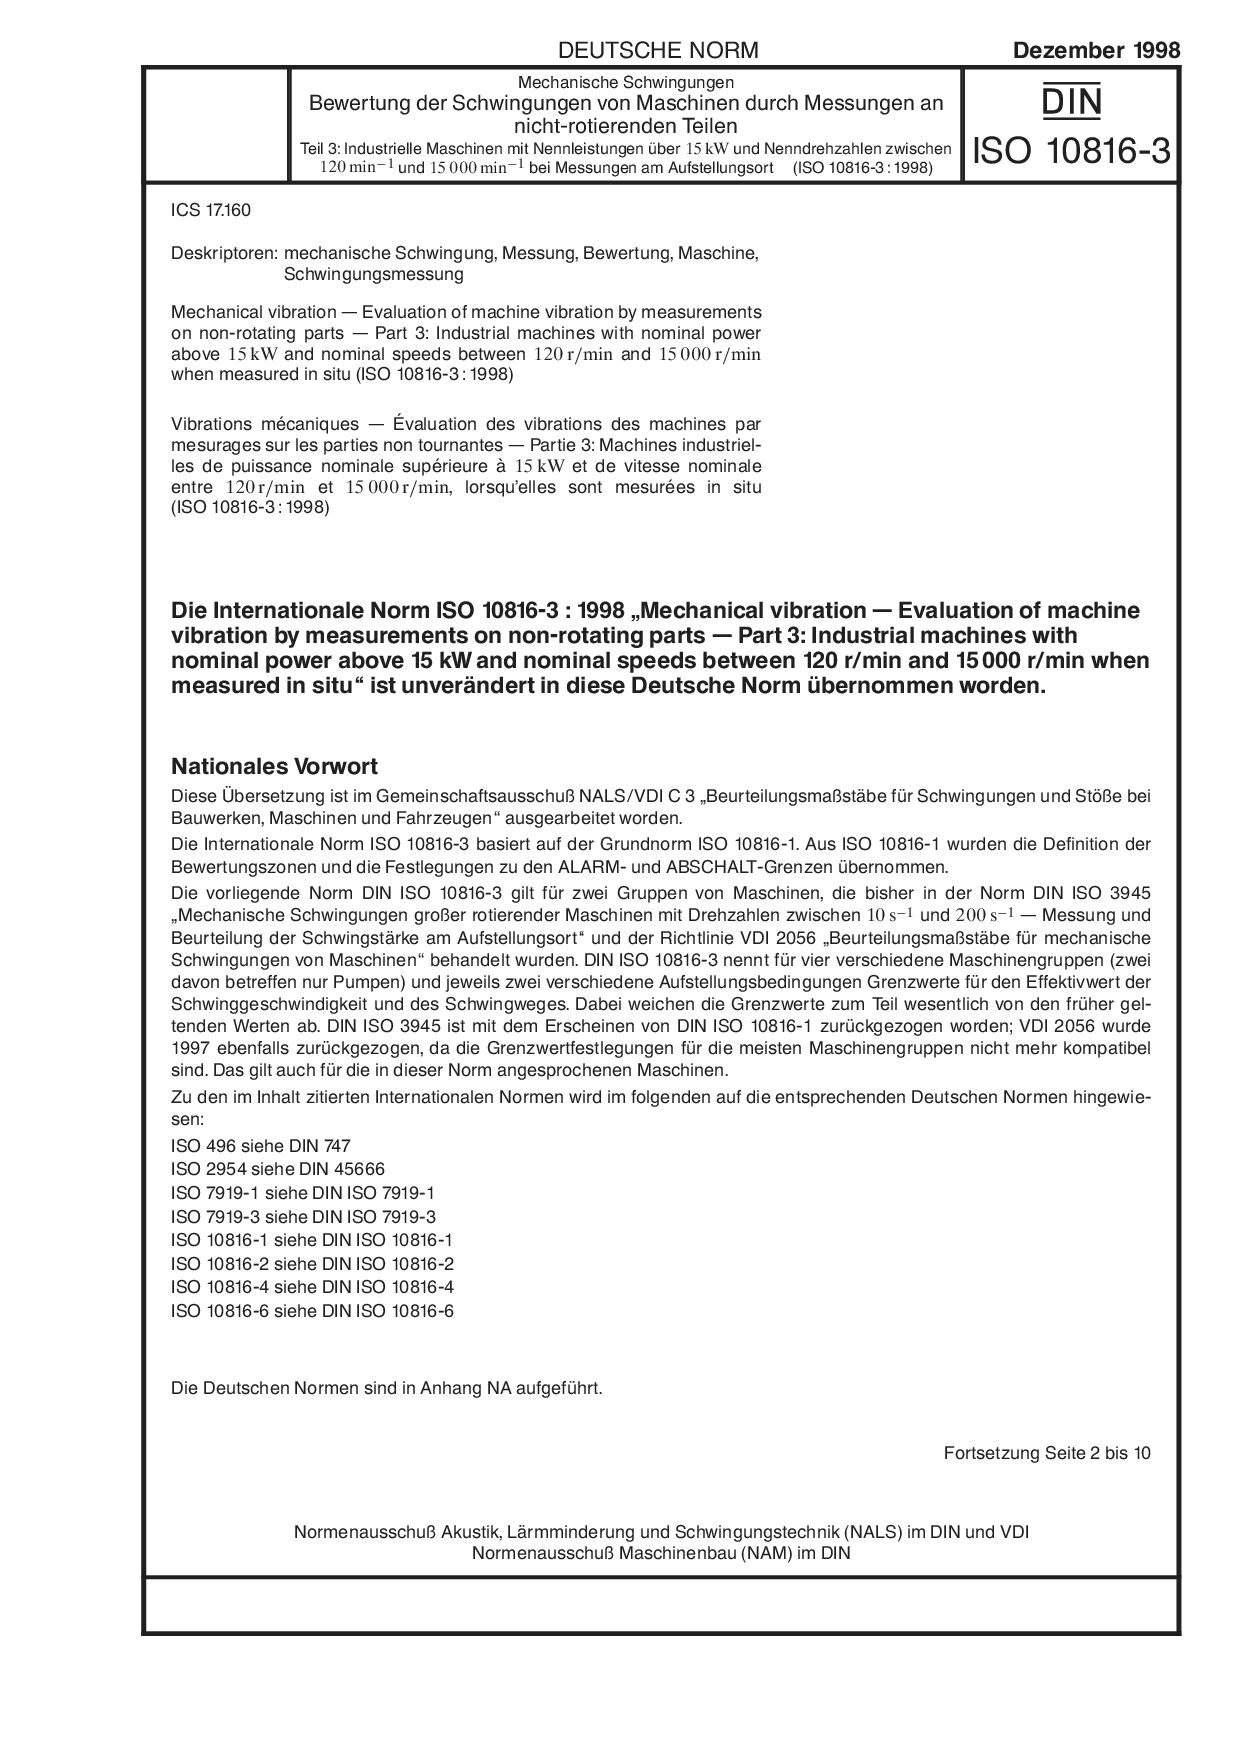 DIN ISO 10816-3:1998-12